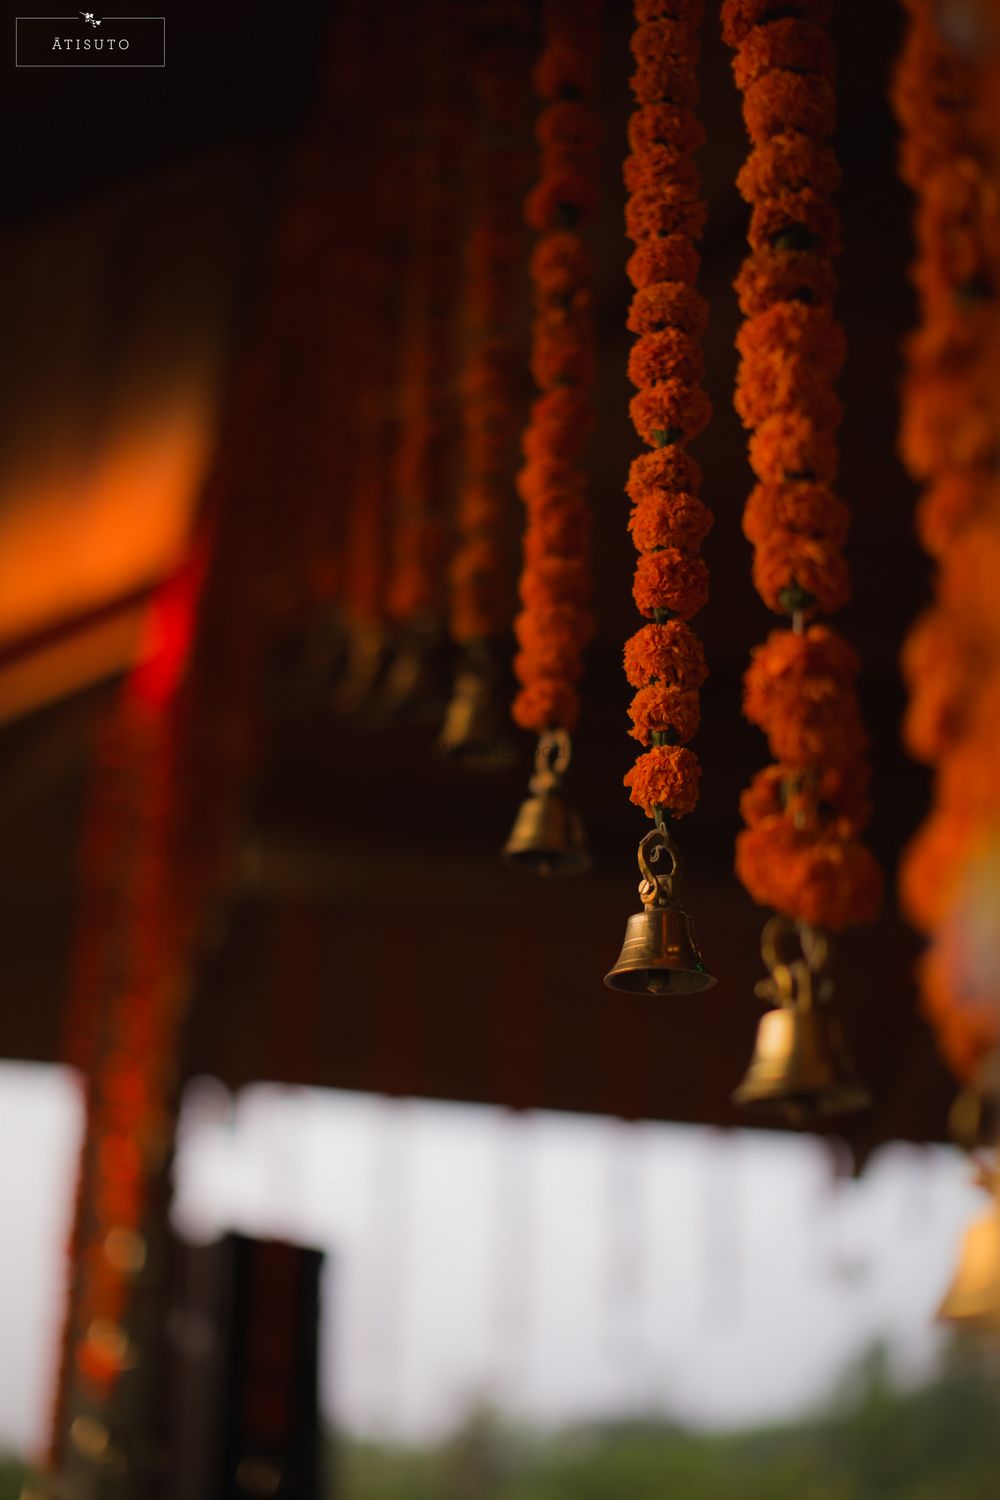 Photo of Hanging temple bells South Indian mandap decor